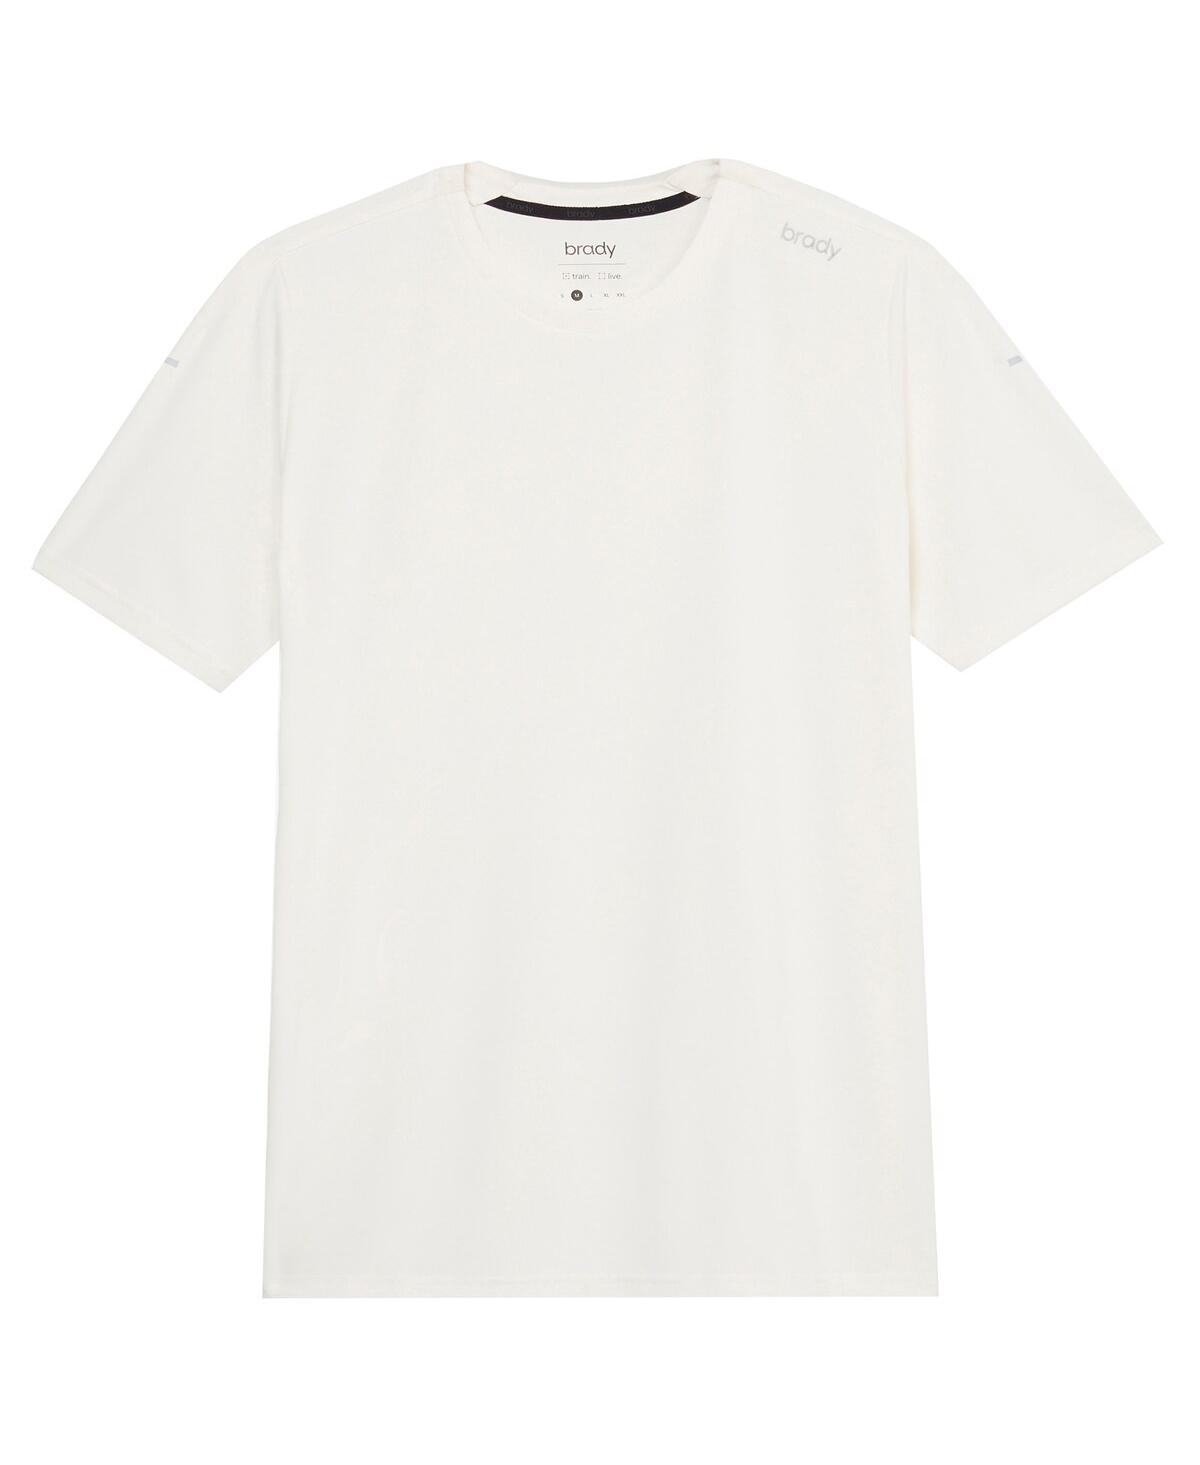 Men's Brady White Cool Touch Performance T-shirt - White